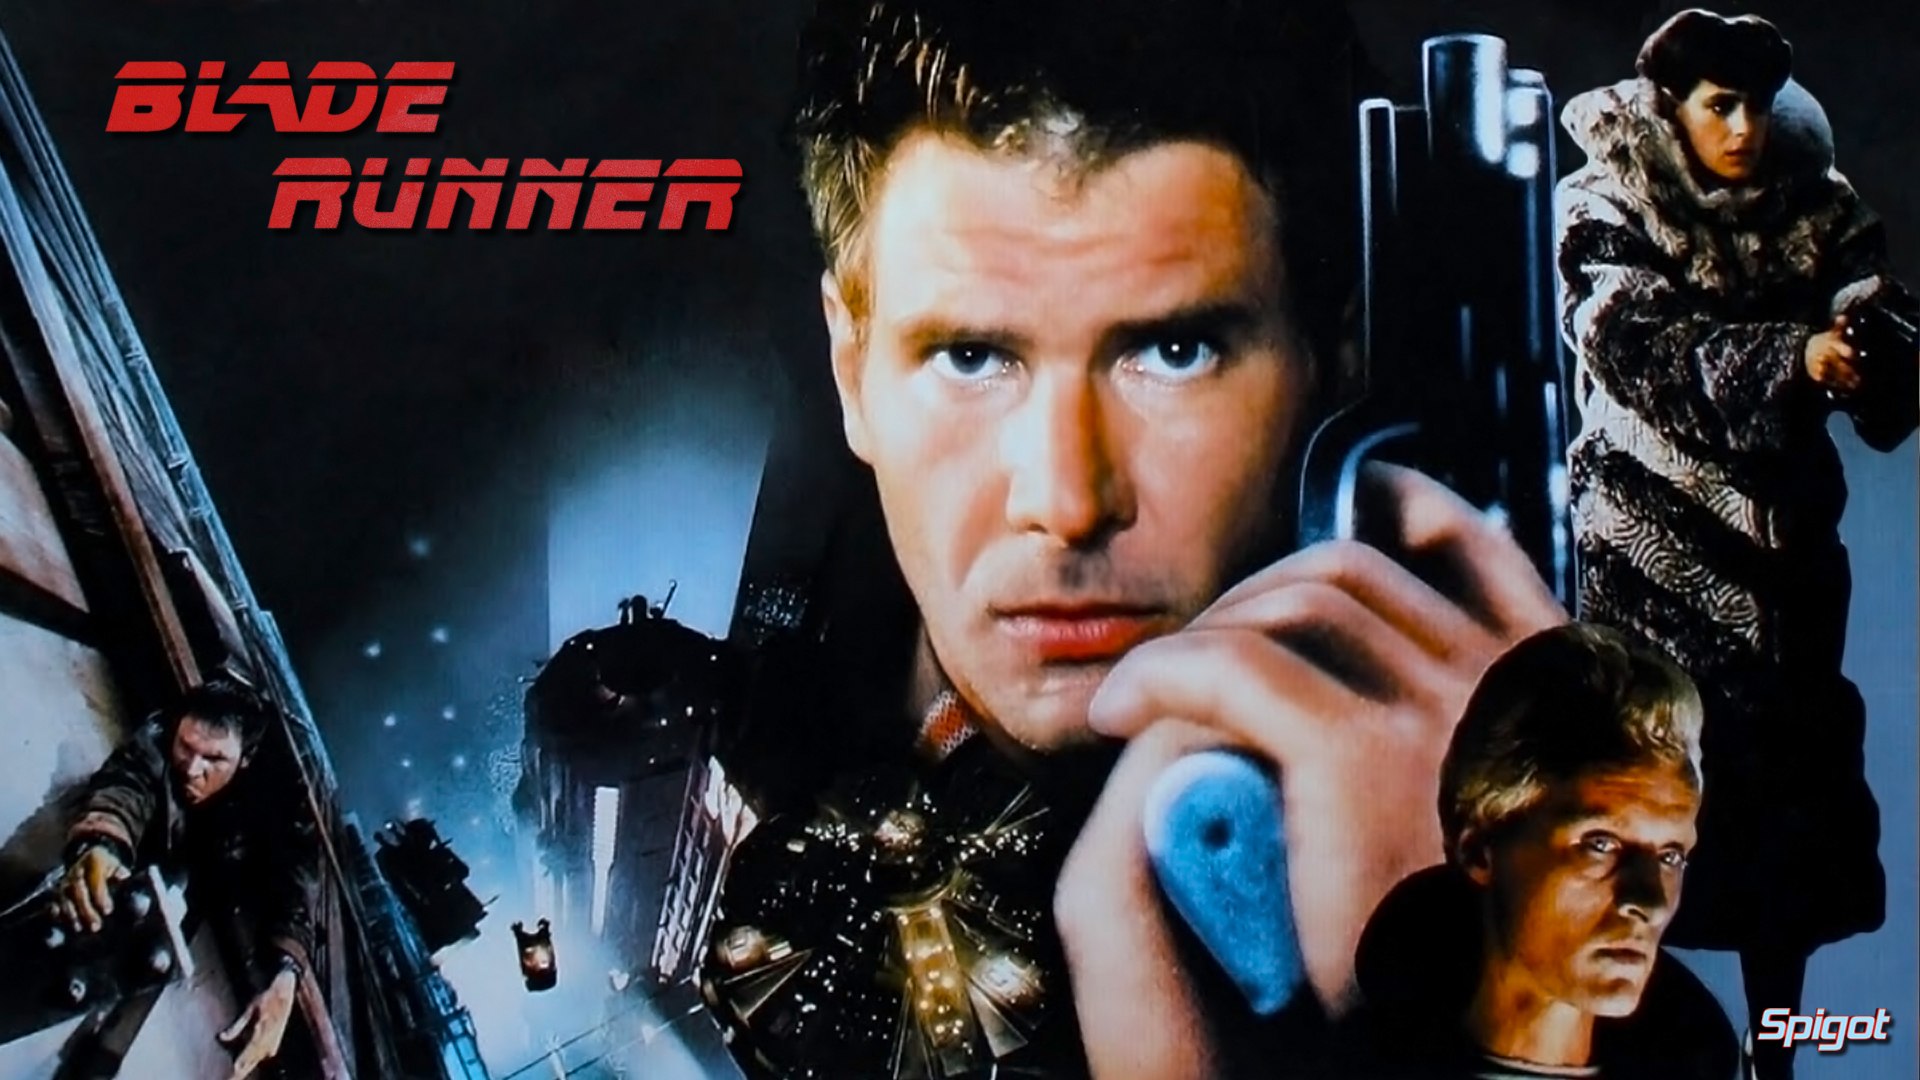 Blade Runner movie (1982) - Ridley Scott, Harrison Ford - video Dailymotion